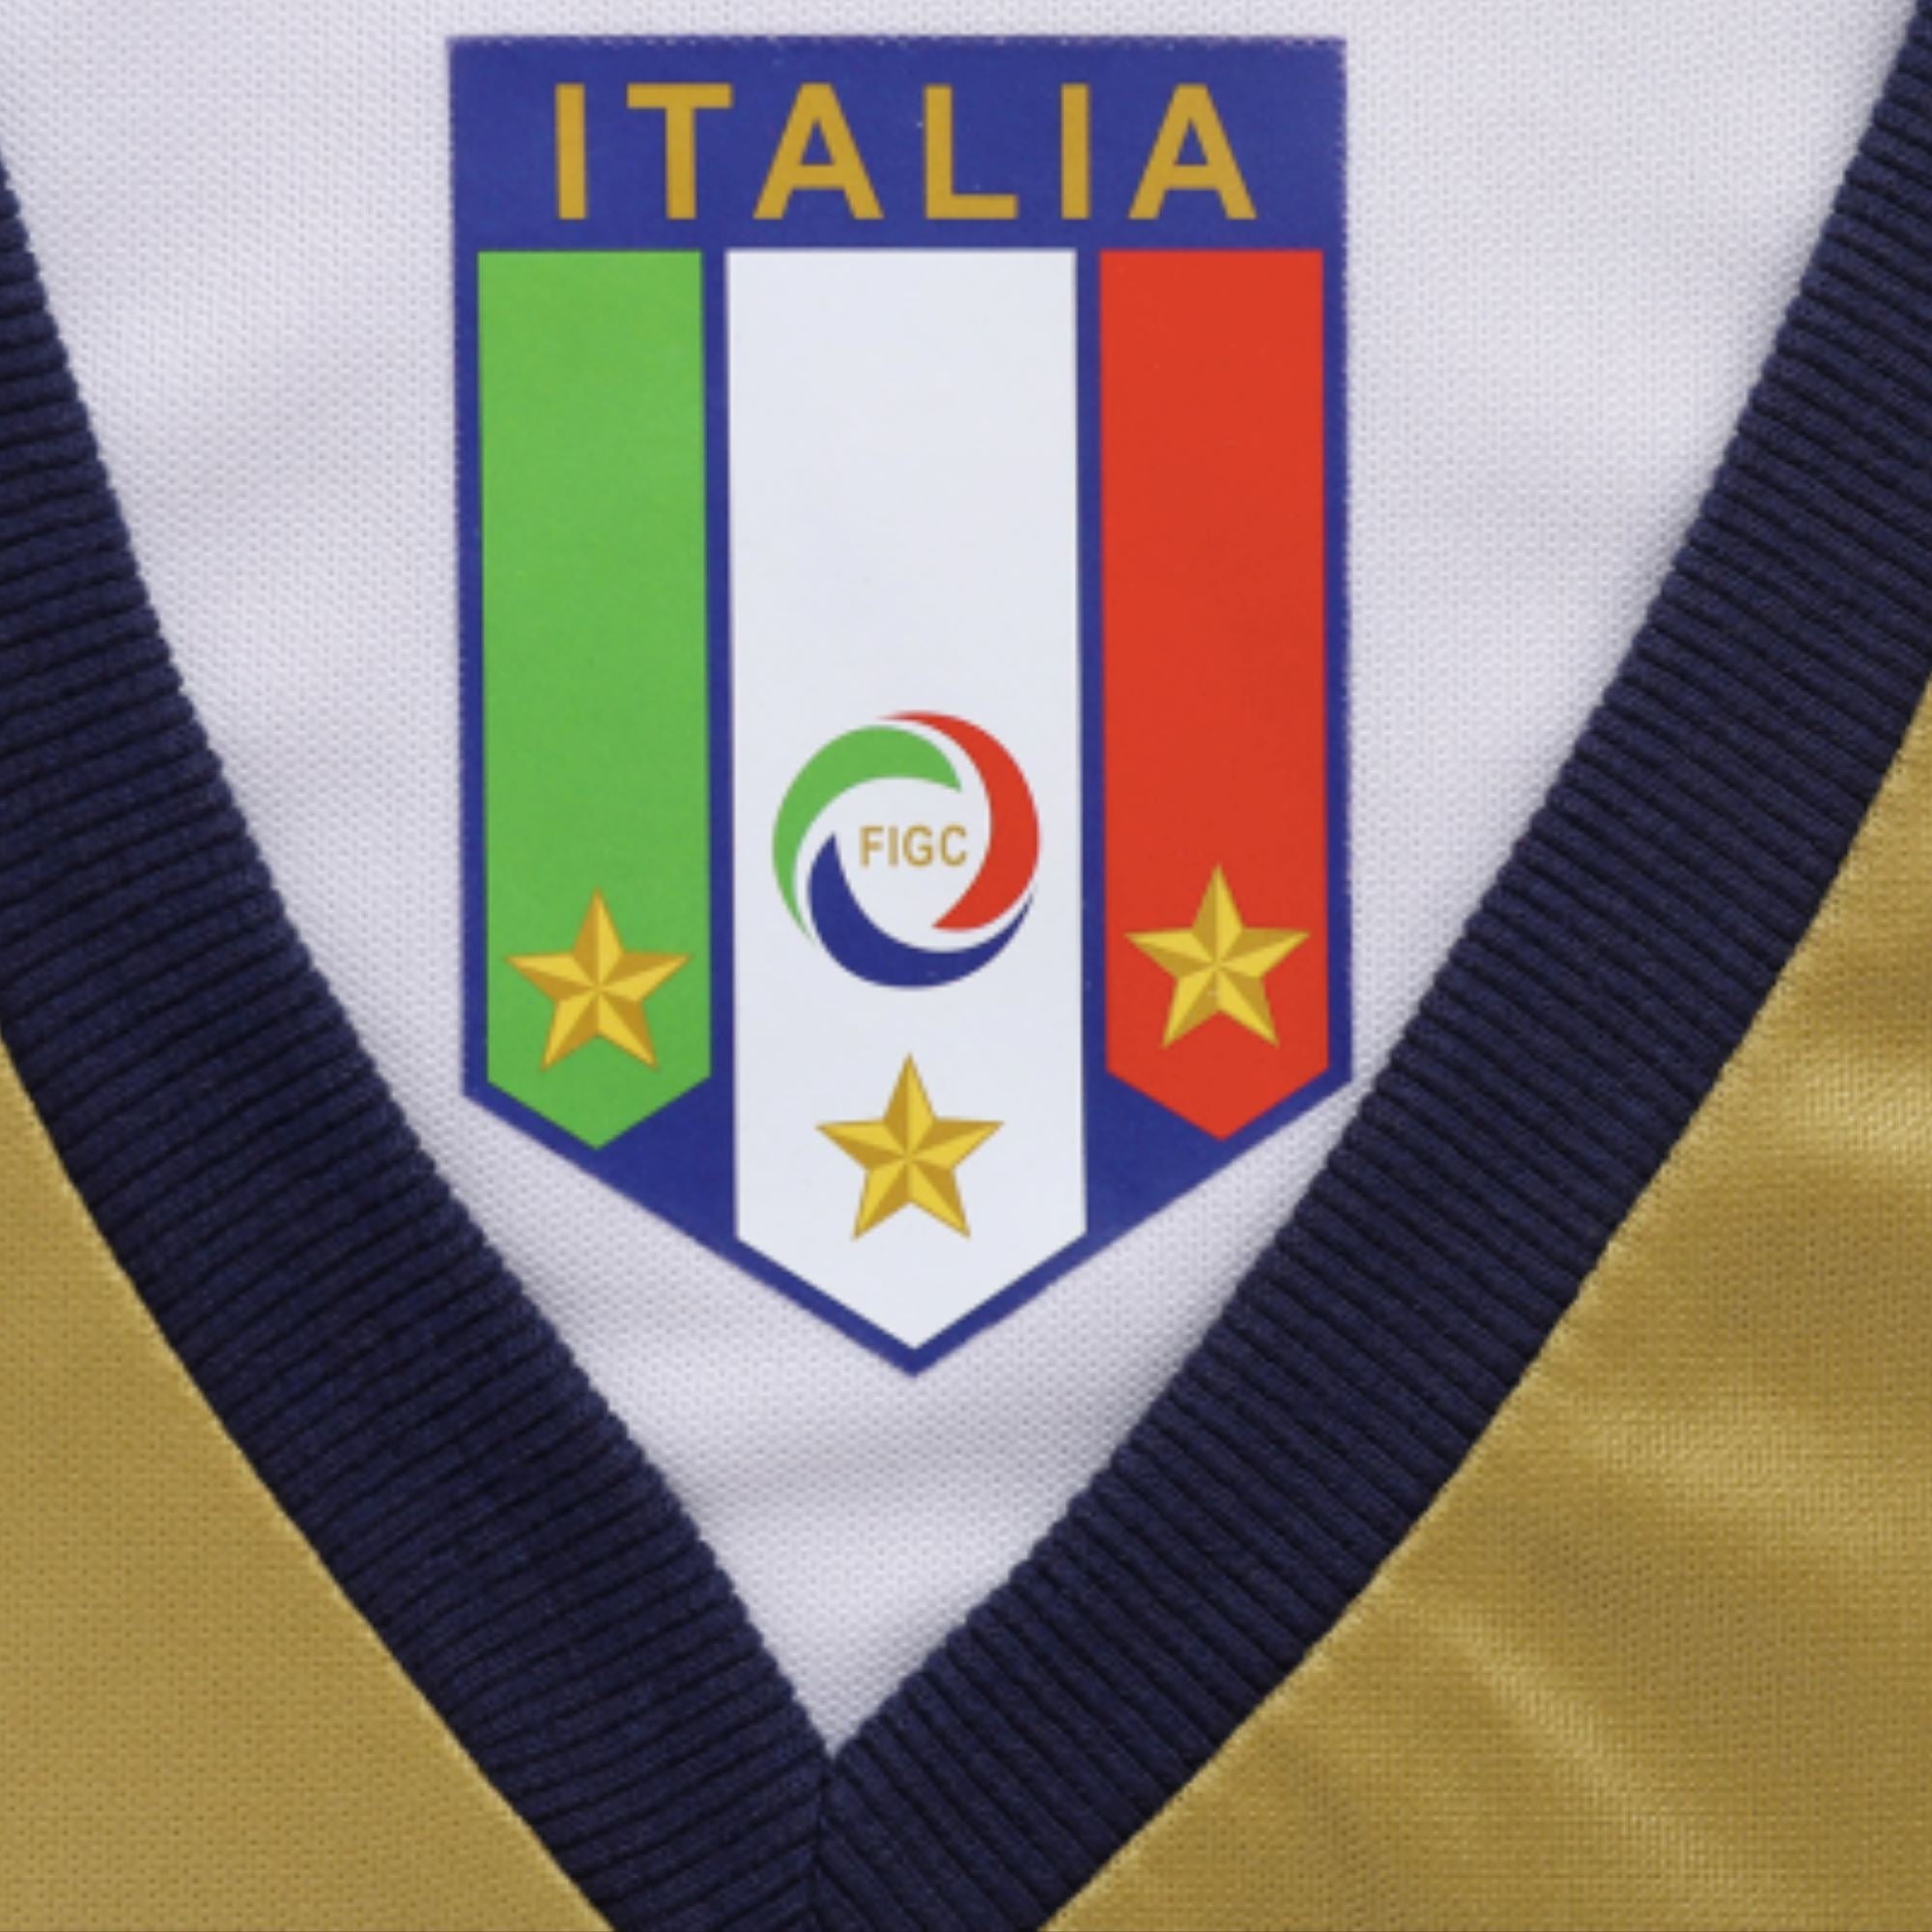 2006 Italy World Cup Goalkeeper Jersey - ITASPORT